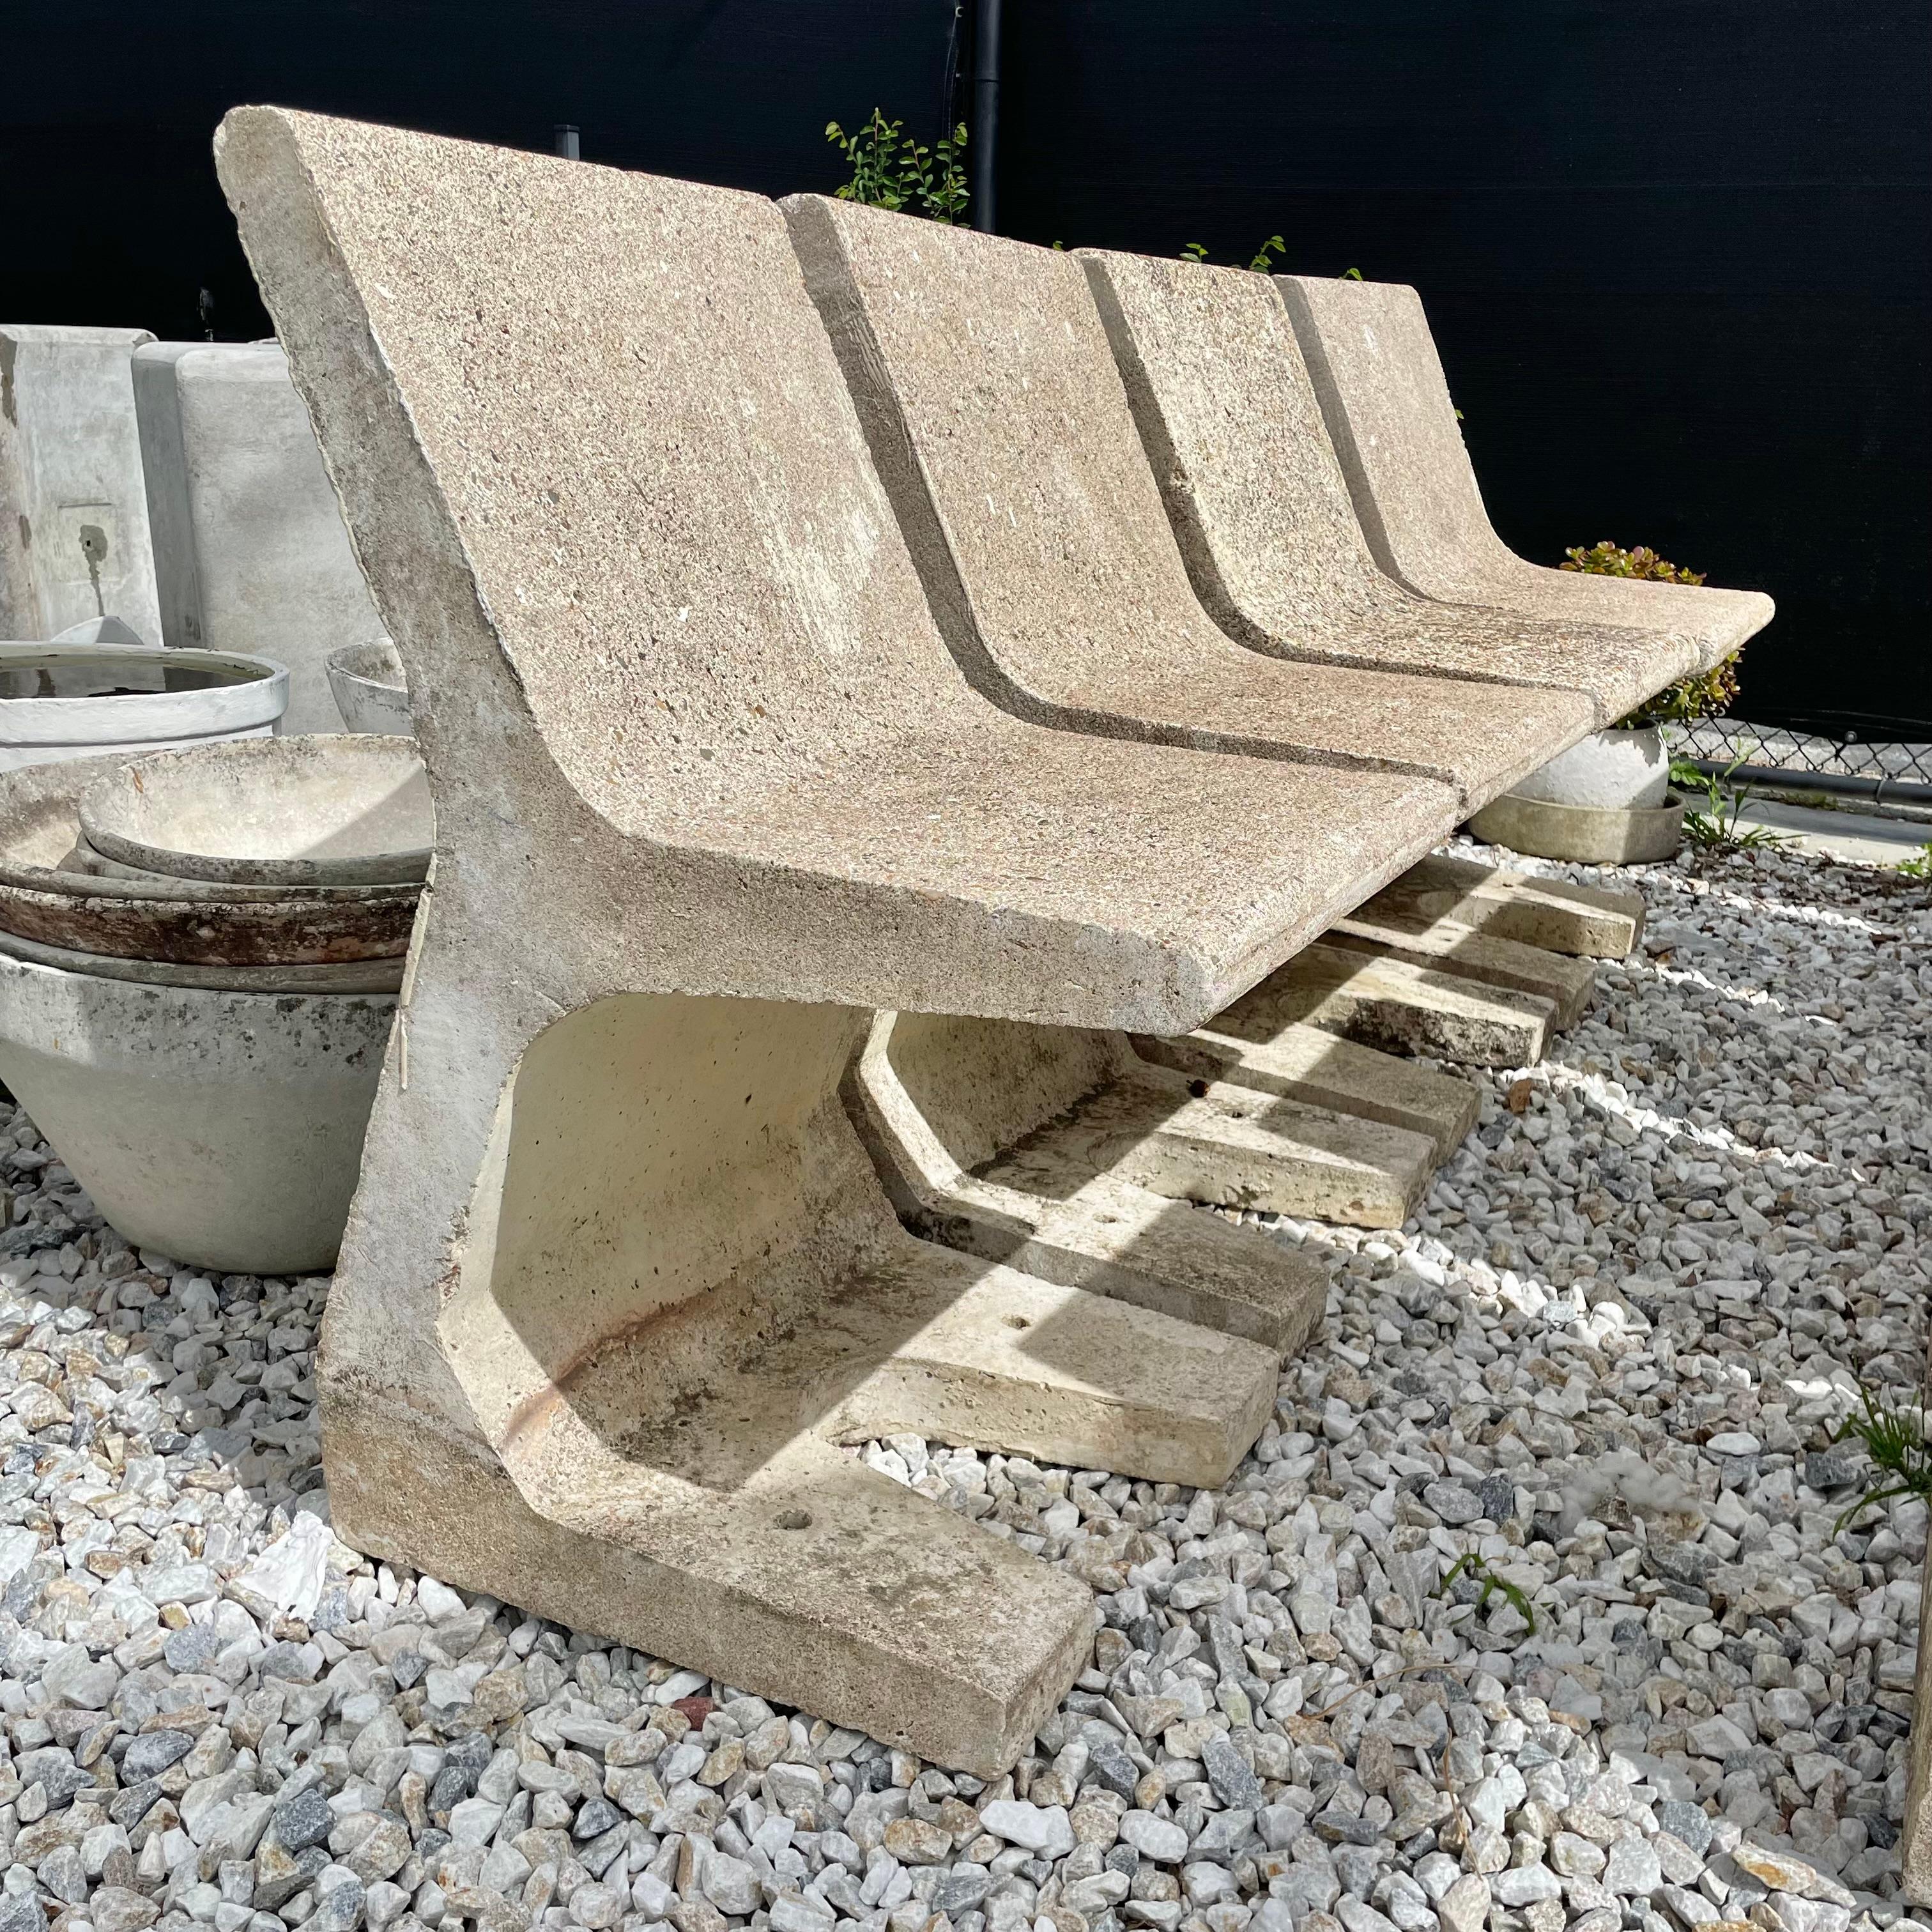 Monumental Concrete Sculptural Chairs, 1970s, France For Sale 4